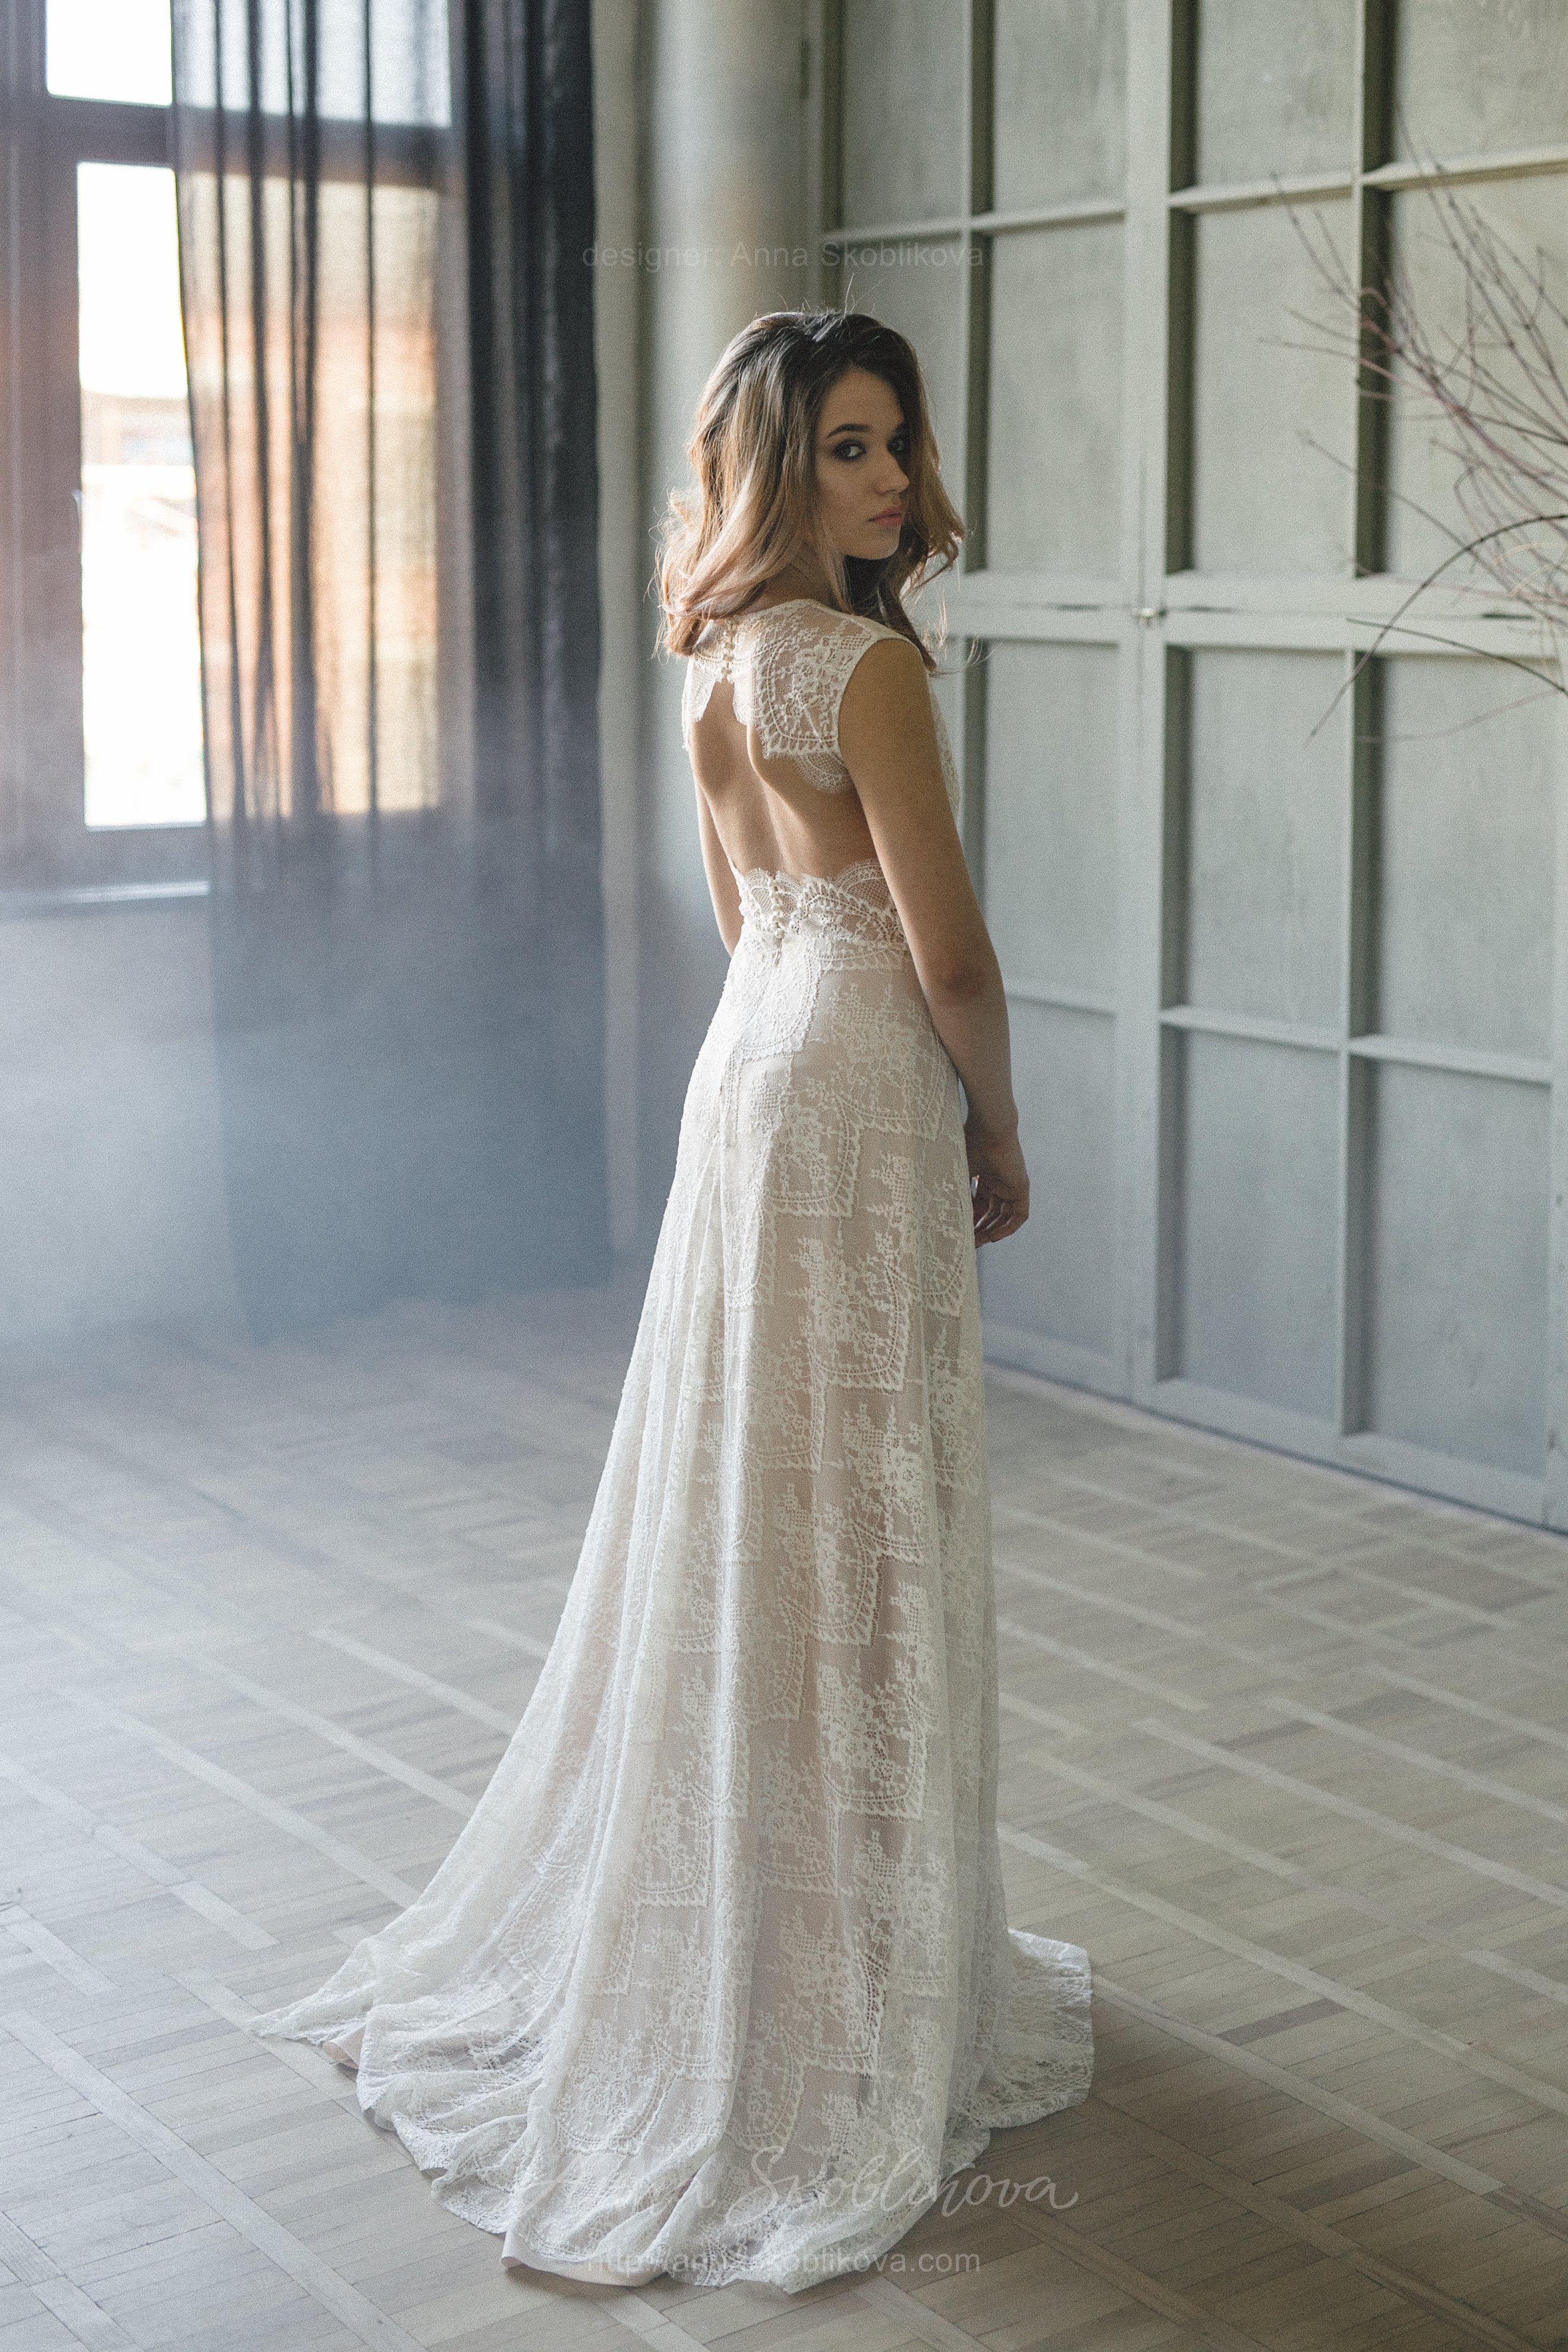 Tender champagne lace wedding dress | Anna Skoblikova